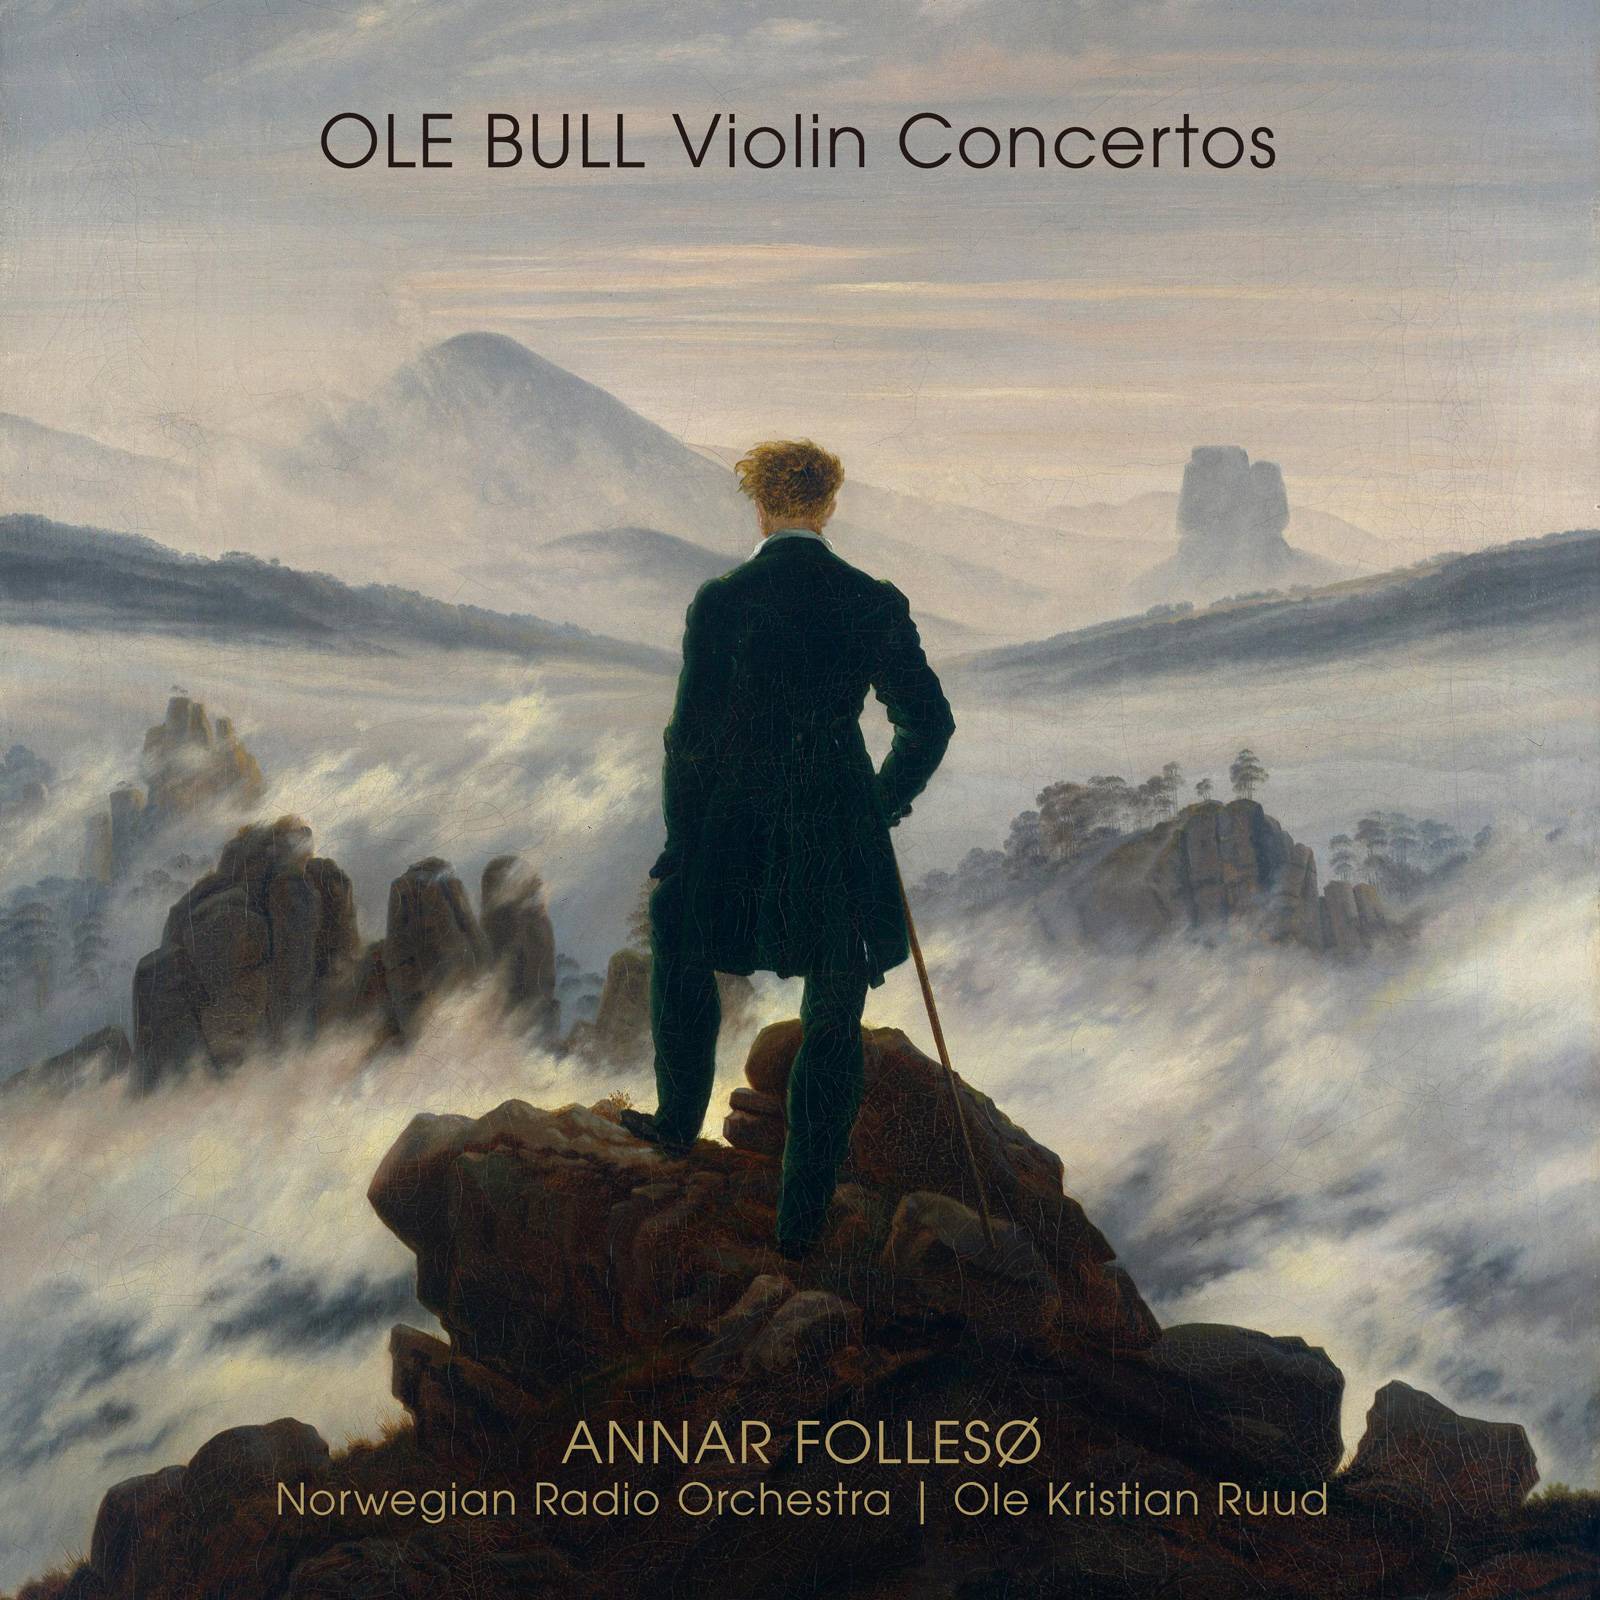 Annar Folleso, Norwegian Radio Orchestra, Ole Kristian Ruud – Ole Bull: Violin Concertos (2010) MCH SACD ISO + FLAC 24bit/96kHz